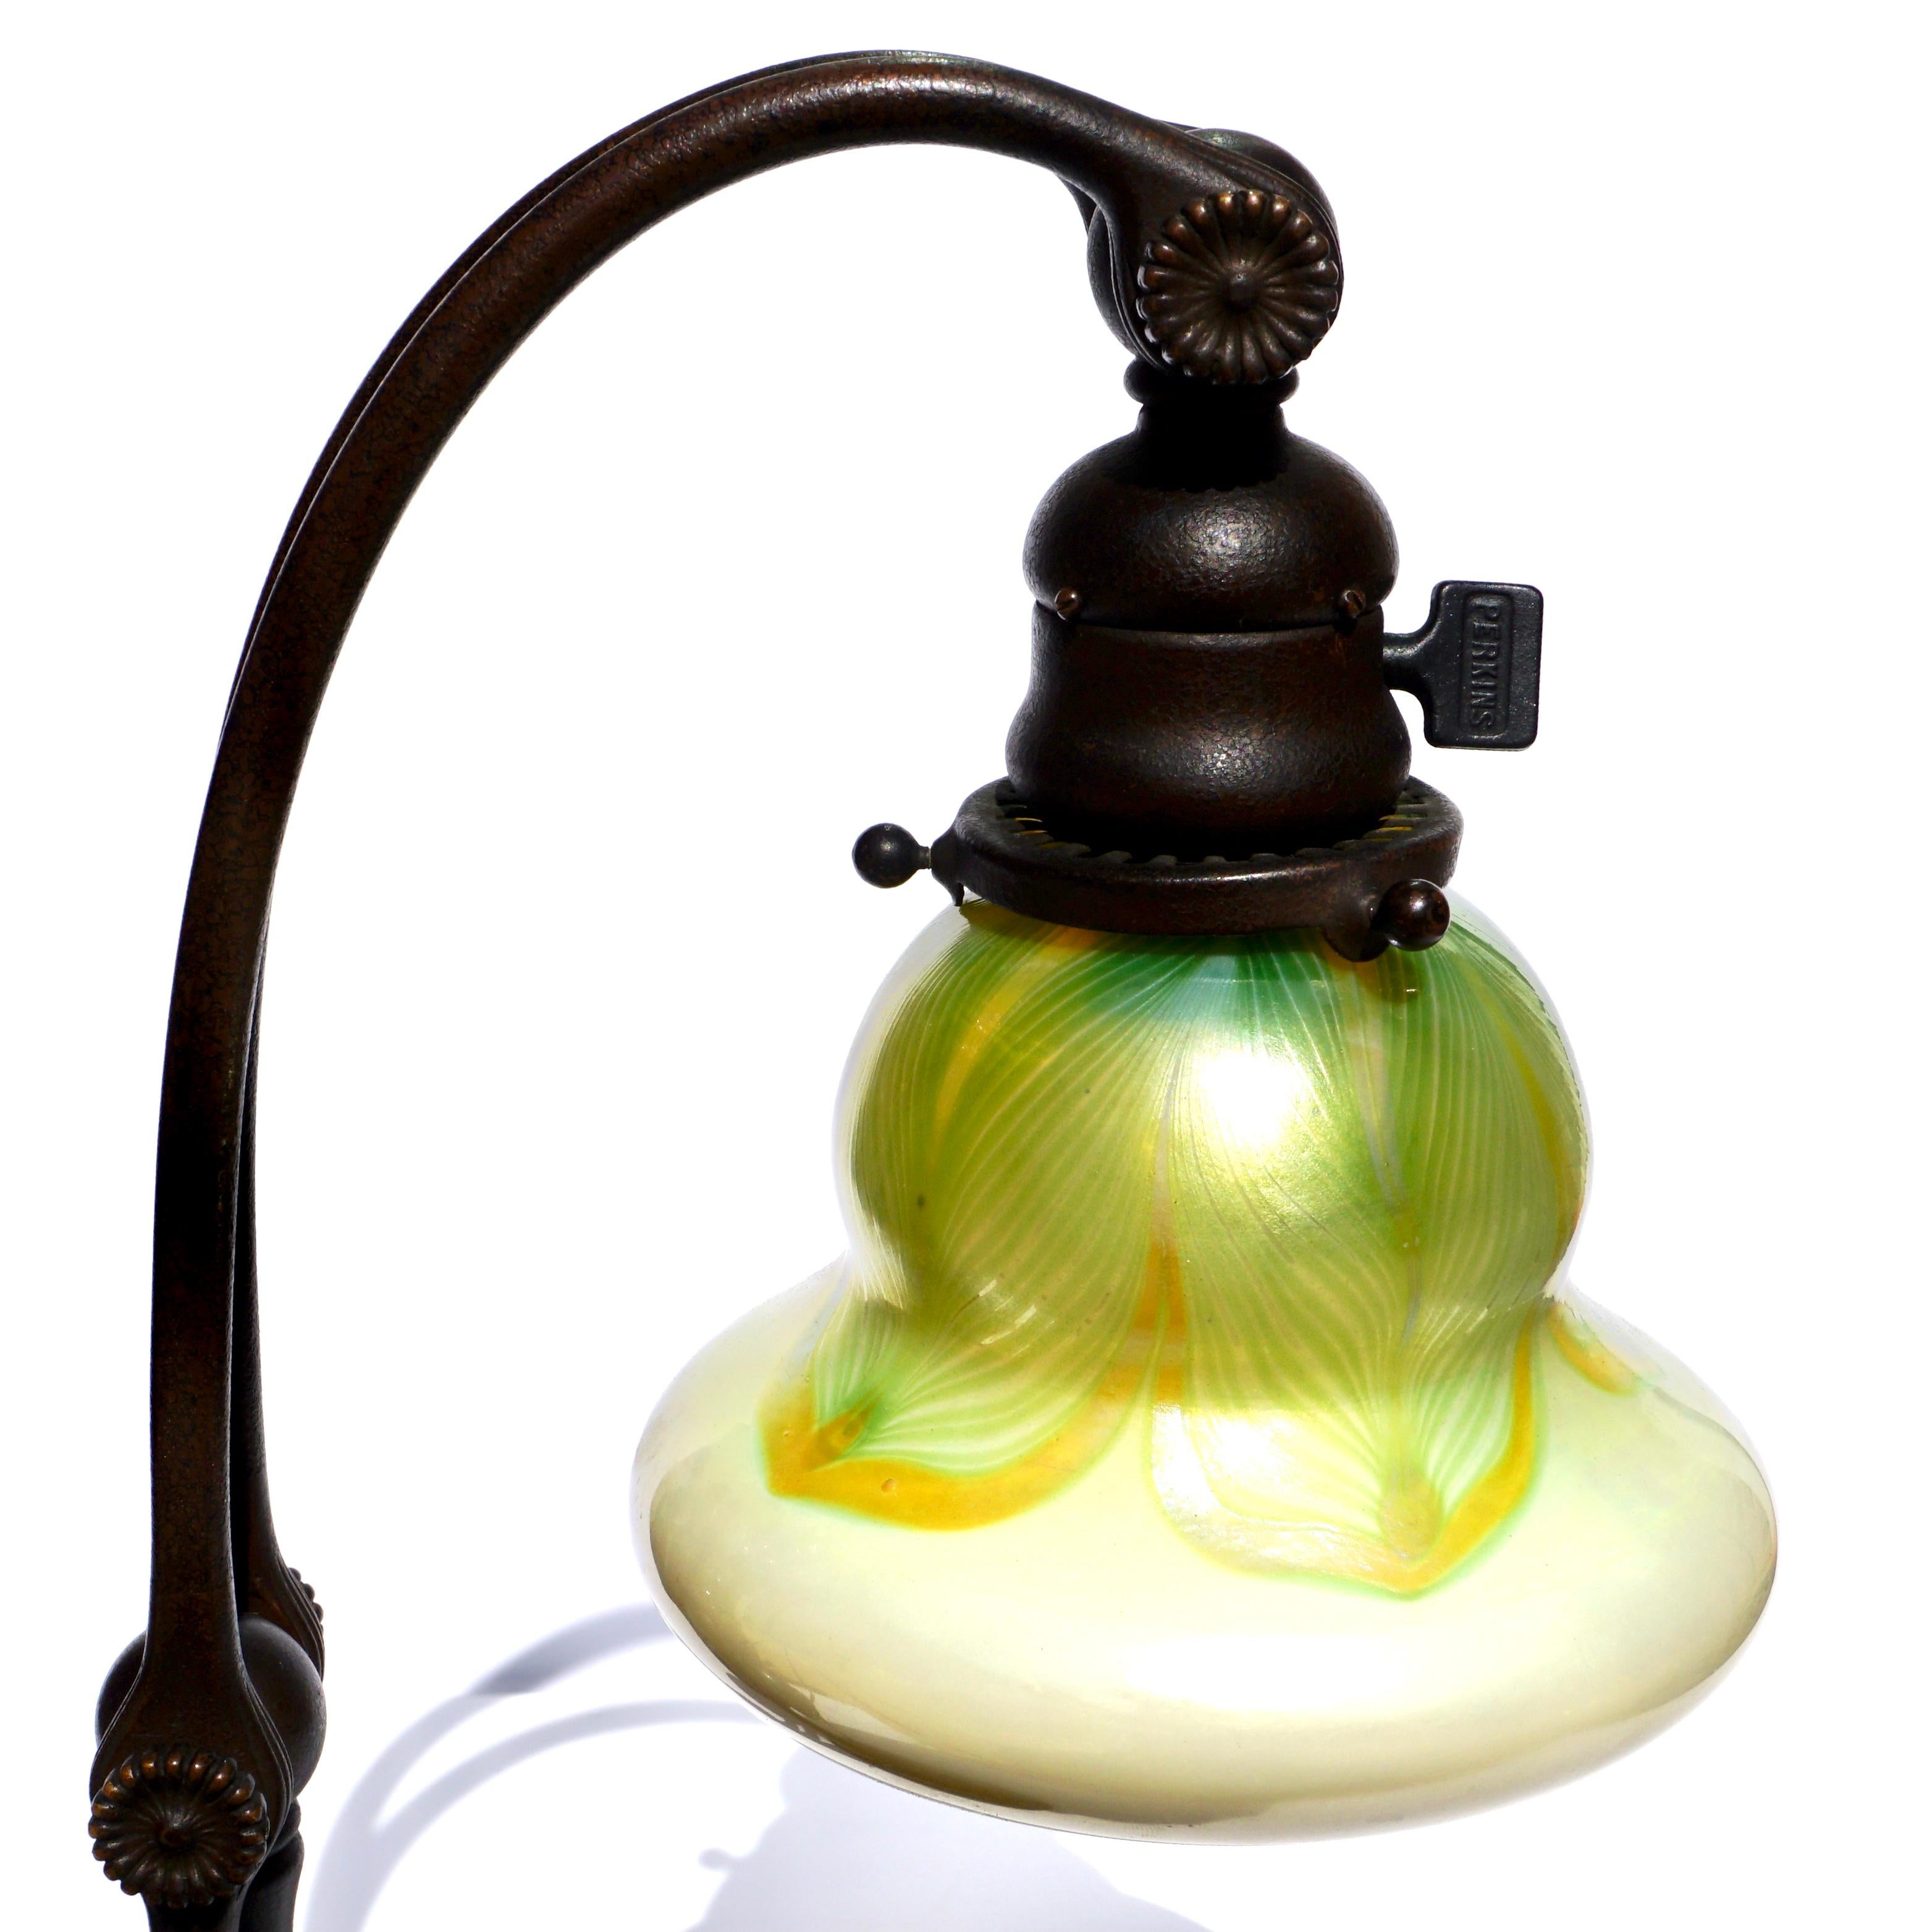 Early 20th Century Tiffany Studios Counter Balance Table Lamp